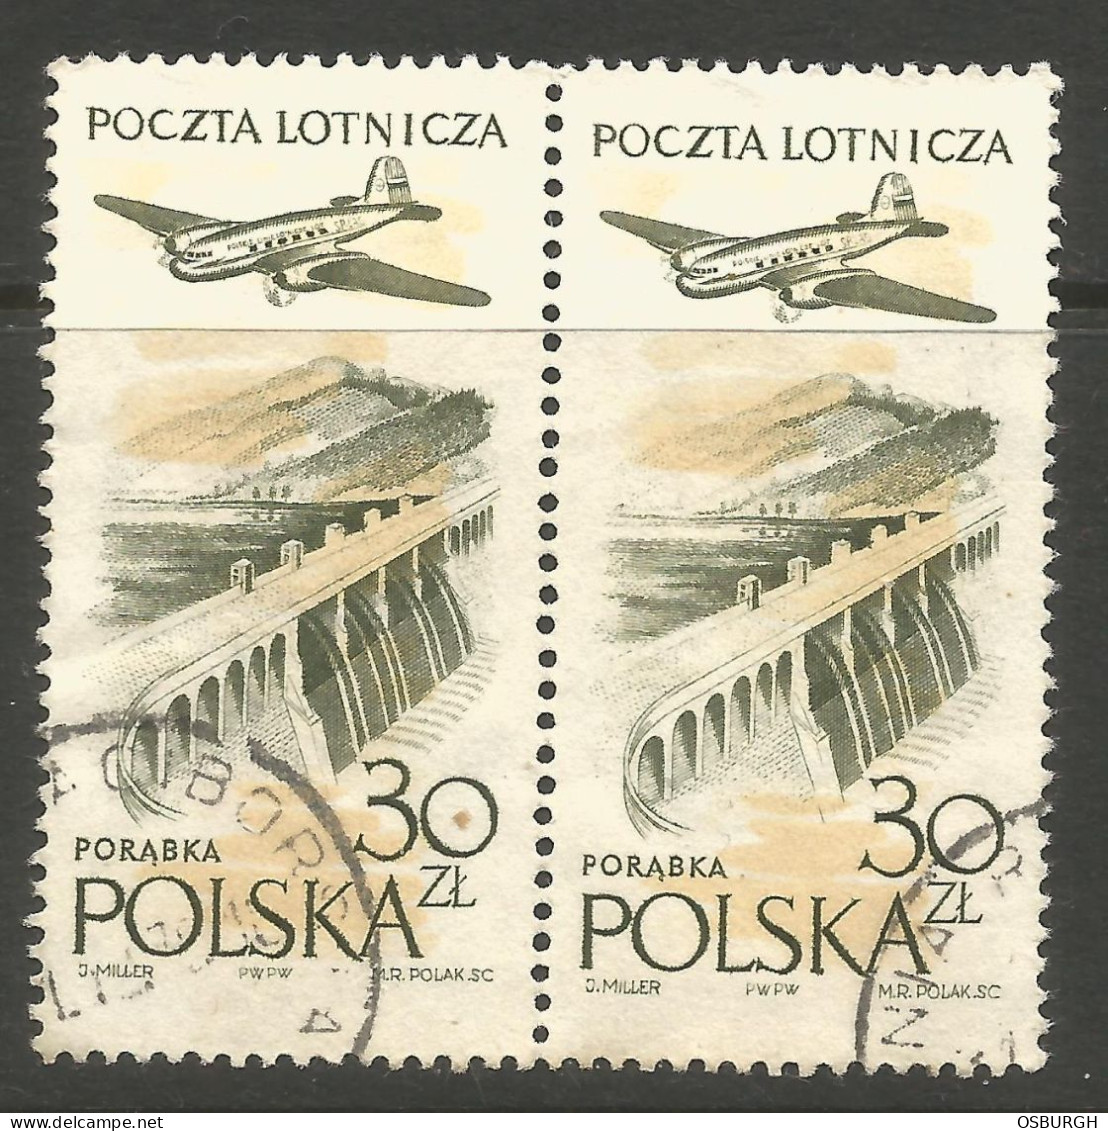 POLAND. 1958. 30zl PORABKA USED PAIR. - Used Stamps